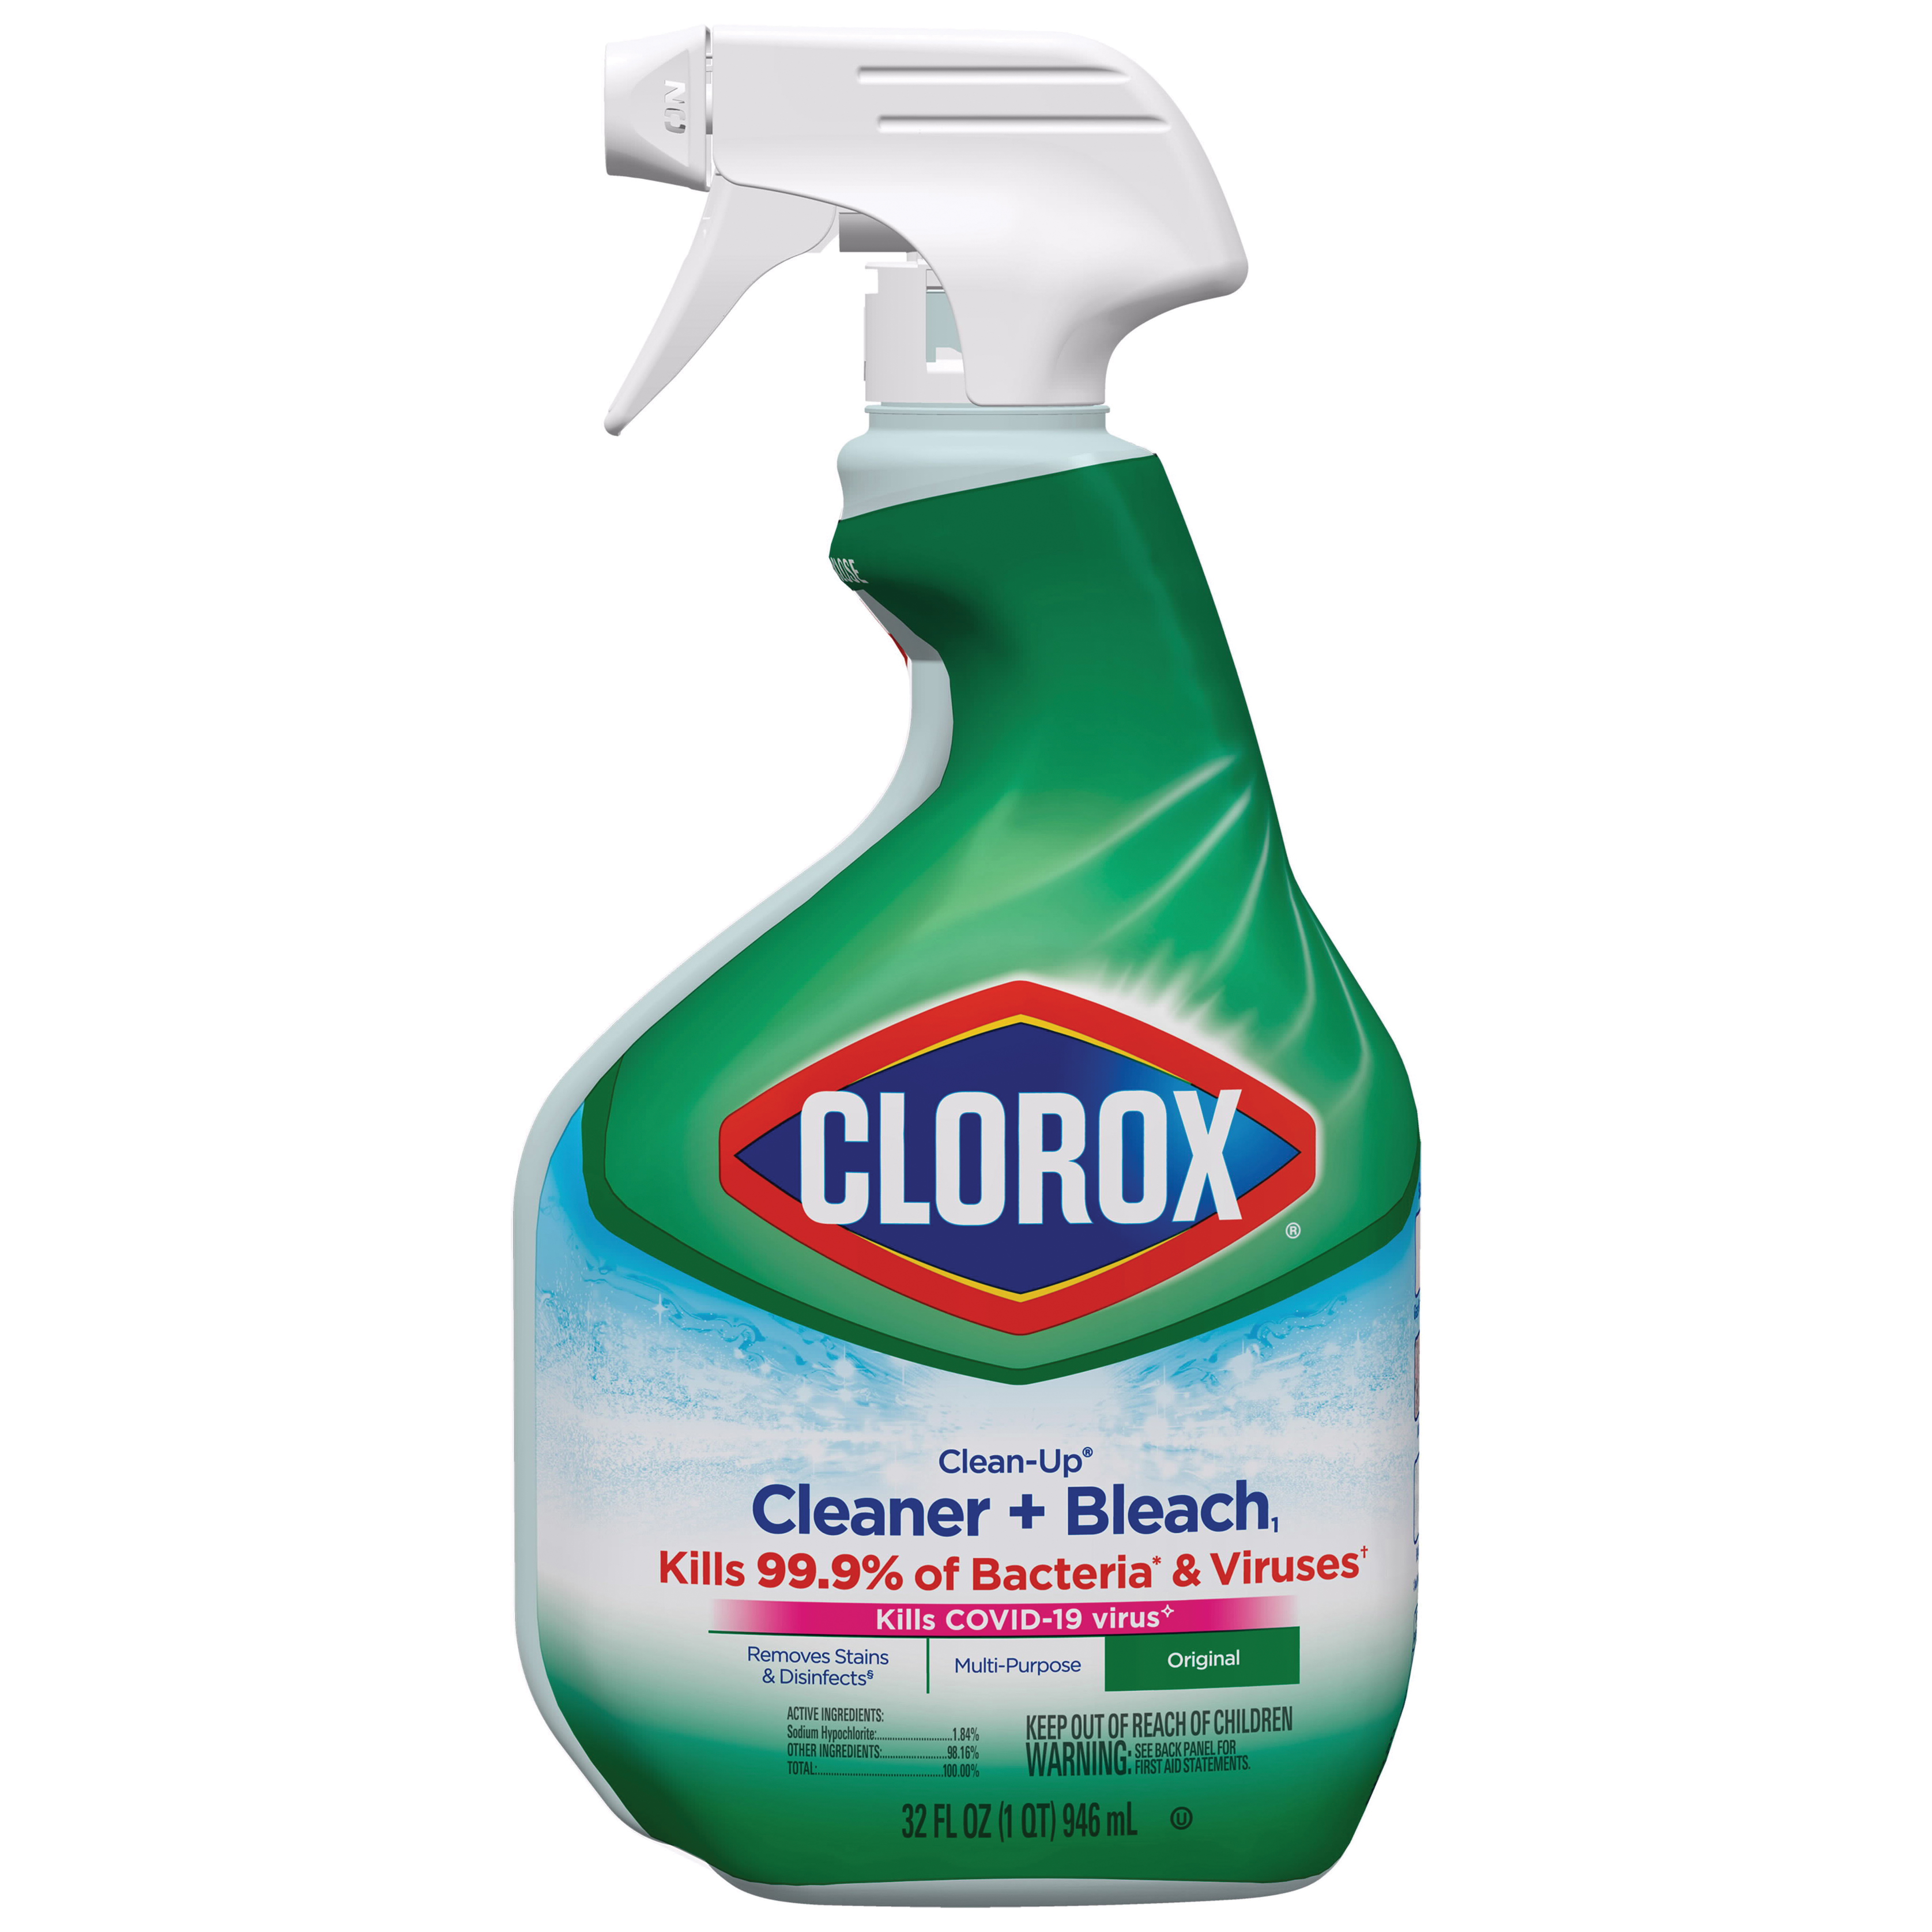 Clean-Up 31221 All-Purpose Cleaner Plus Bleach, 32 fl-oz Bottle, Original, Multi-Color